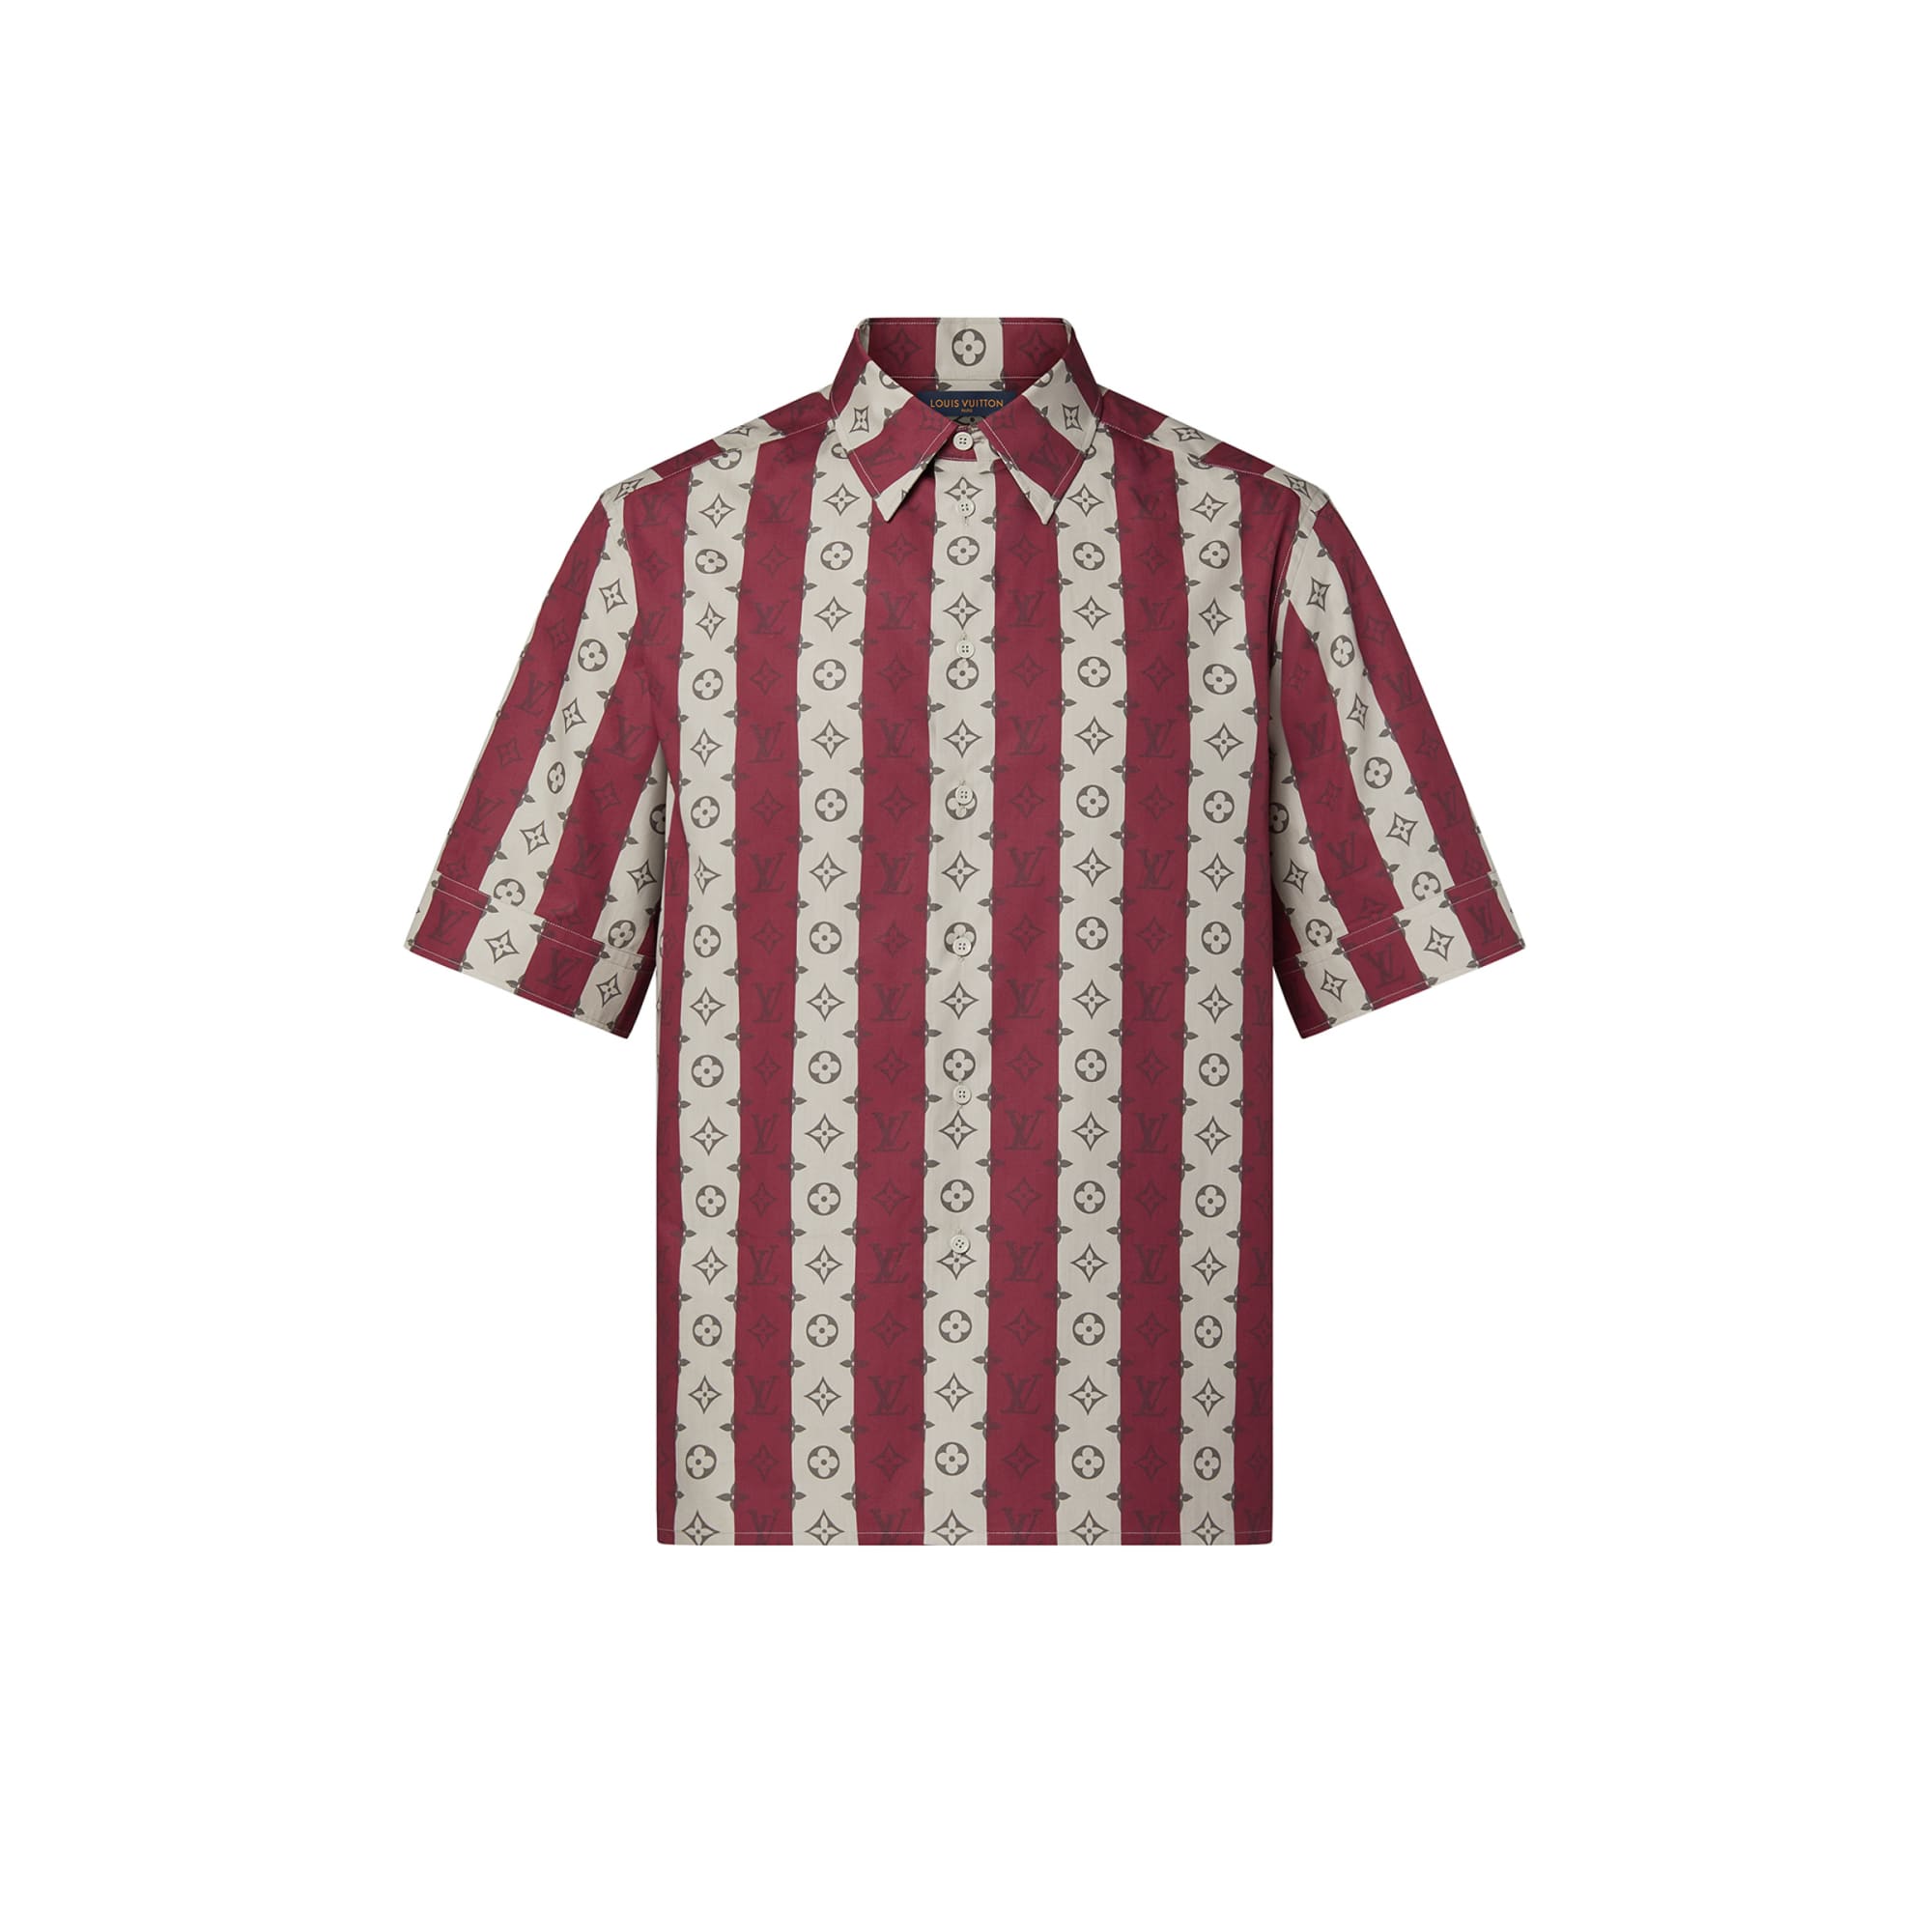 LOUIS VUITTON x NIGO® 2021Japan limited item - shirts (114,400 yen)